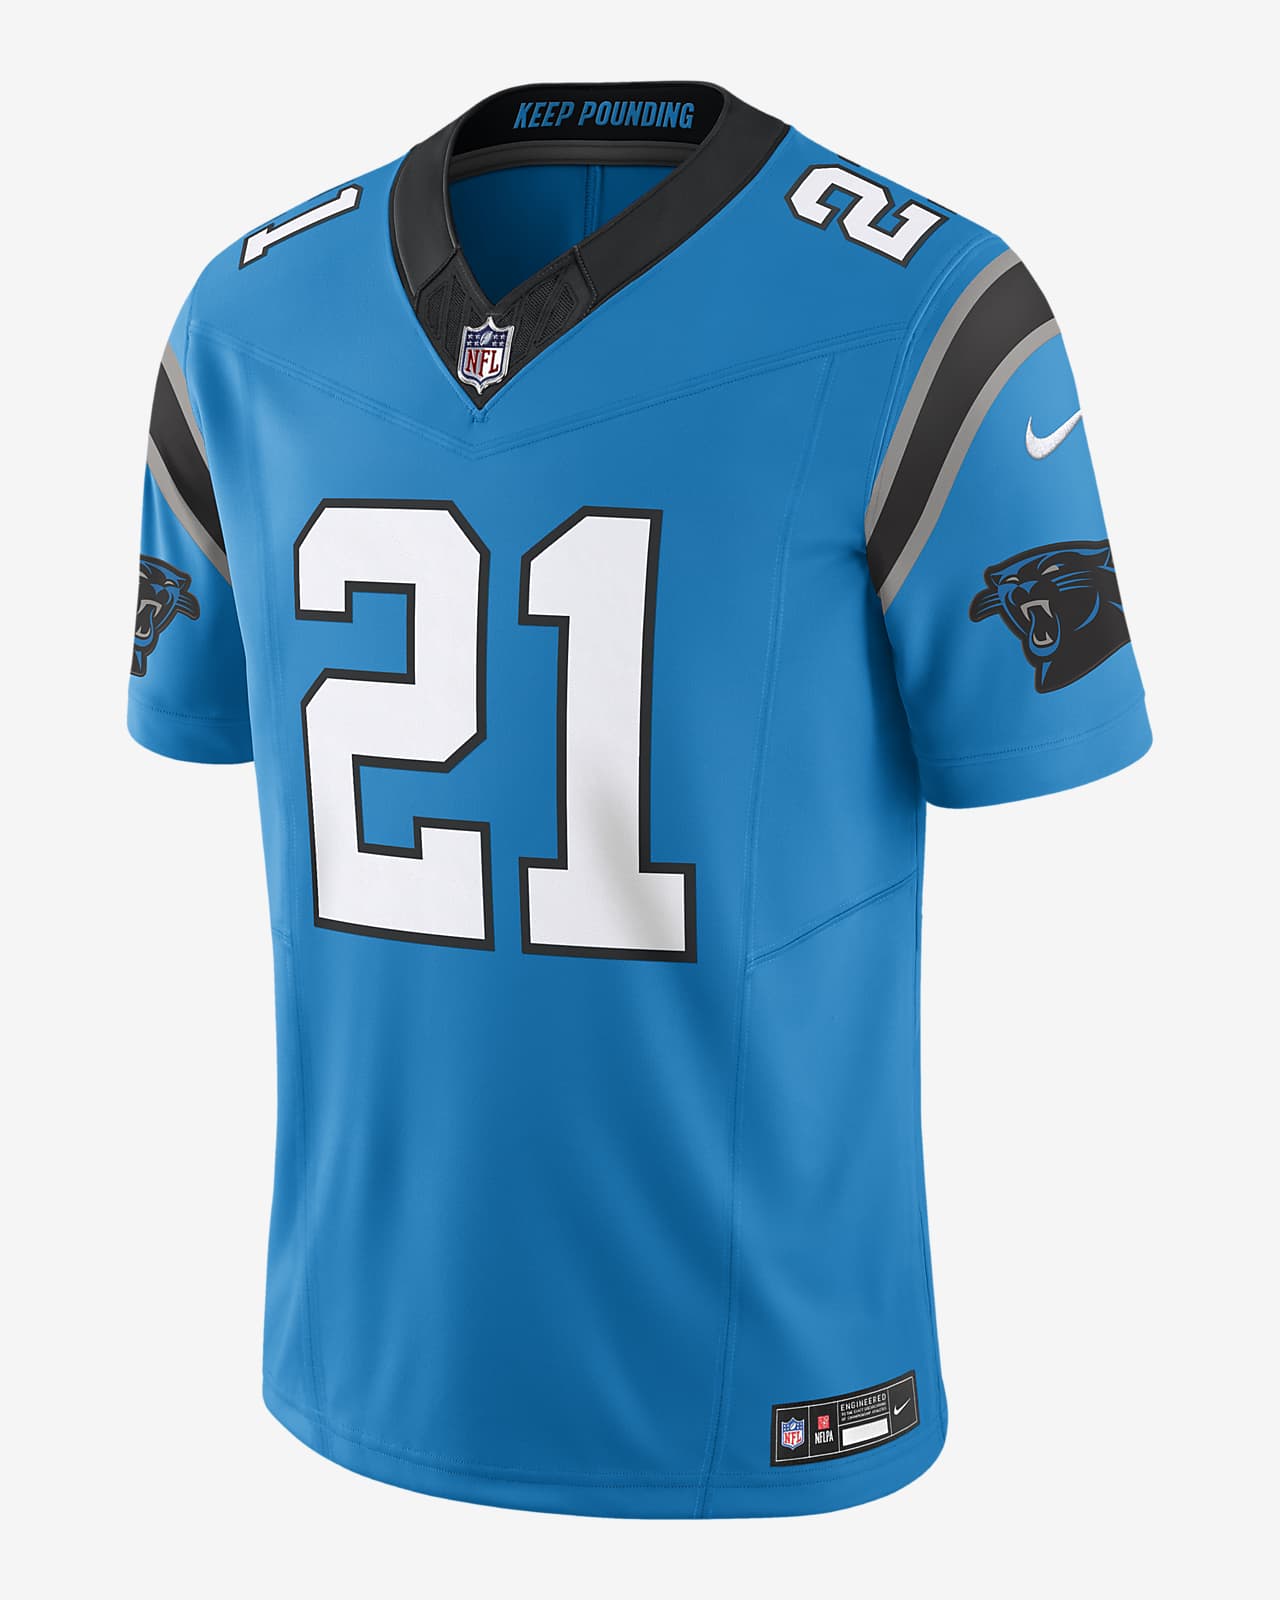 Jersey de fútbol americano Nike Dri-FIT de la NFL Limited para hombre Jeremy Chinn Carolina Panthers